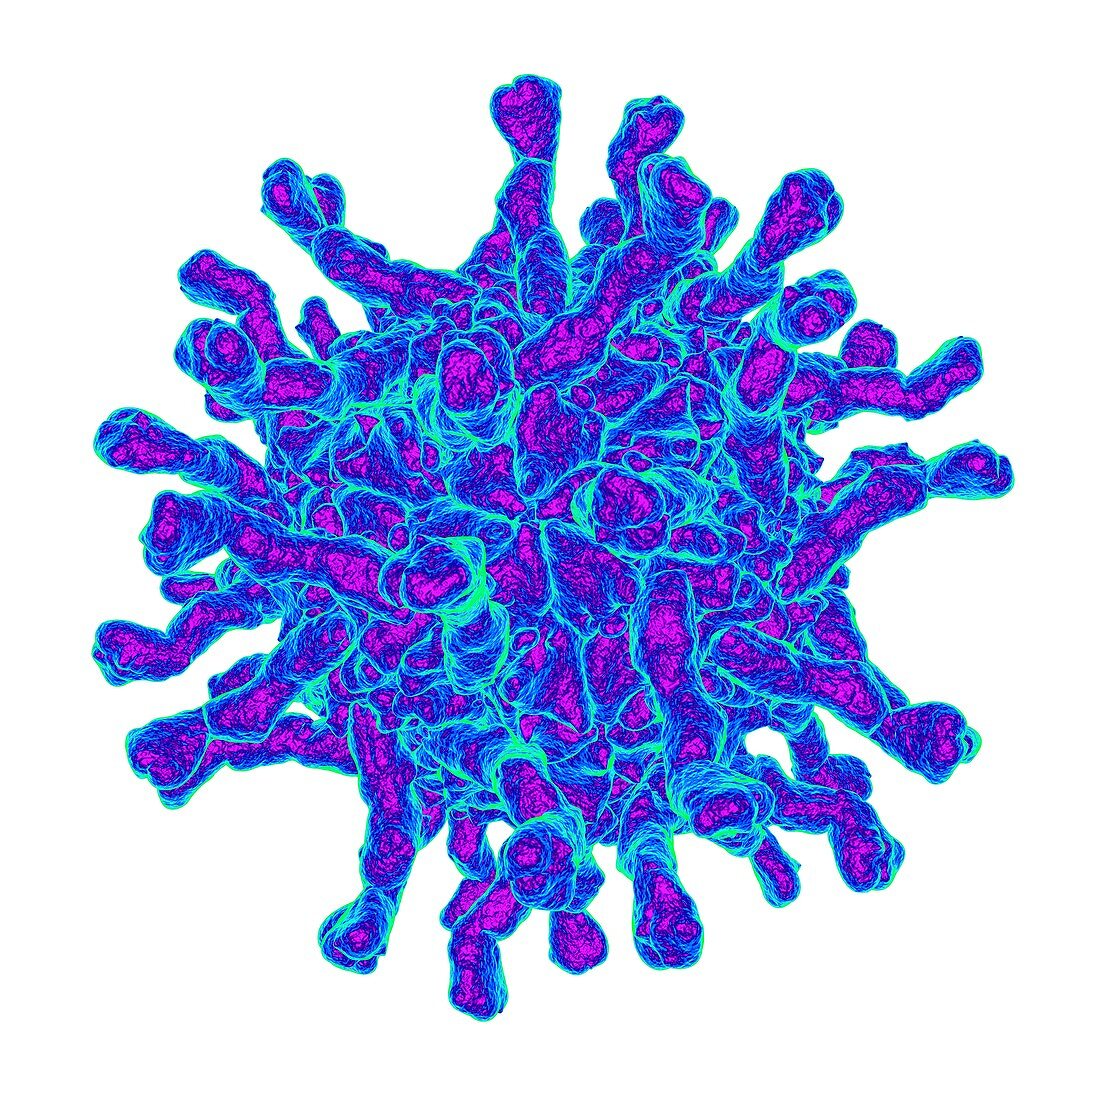 Poliovirus receptor complex,artwork